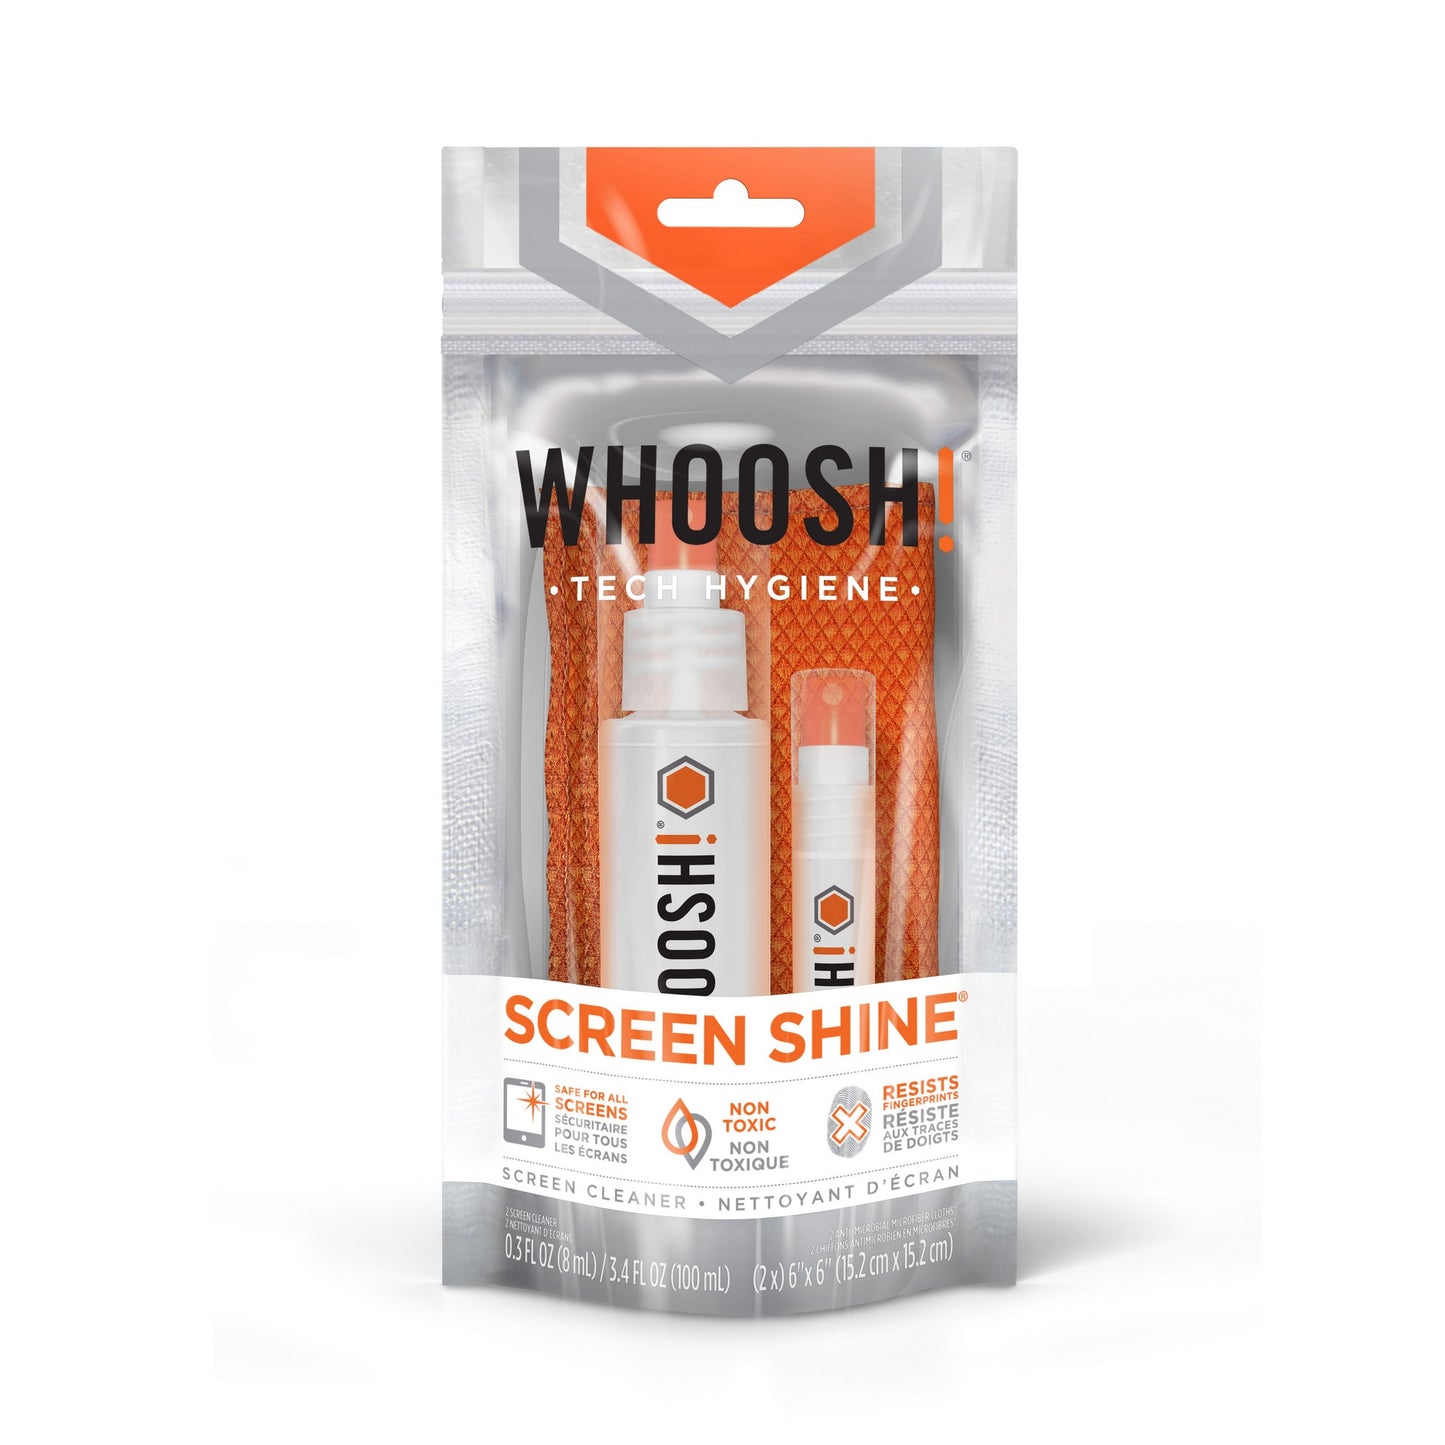 WHOOSH! Screen Shine Duo+ Desk Bottle and Pocket Sprayer - 15-00666